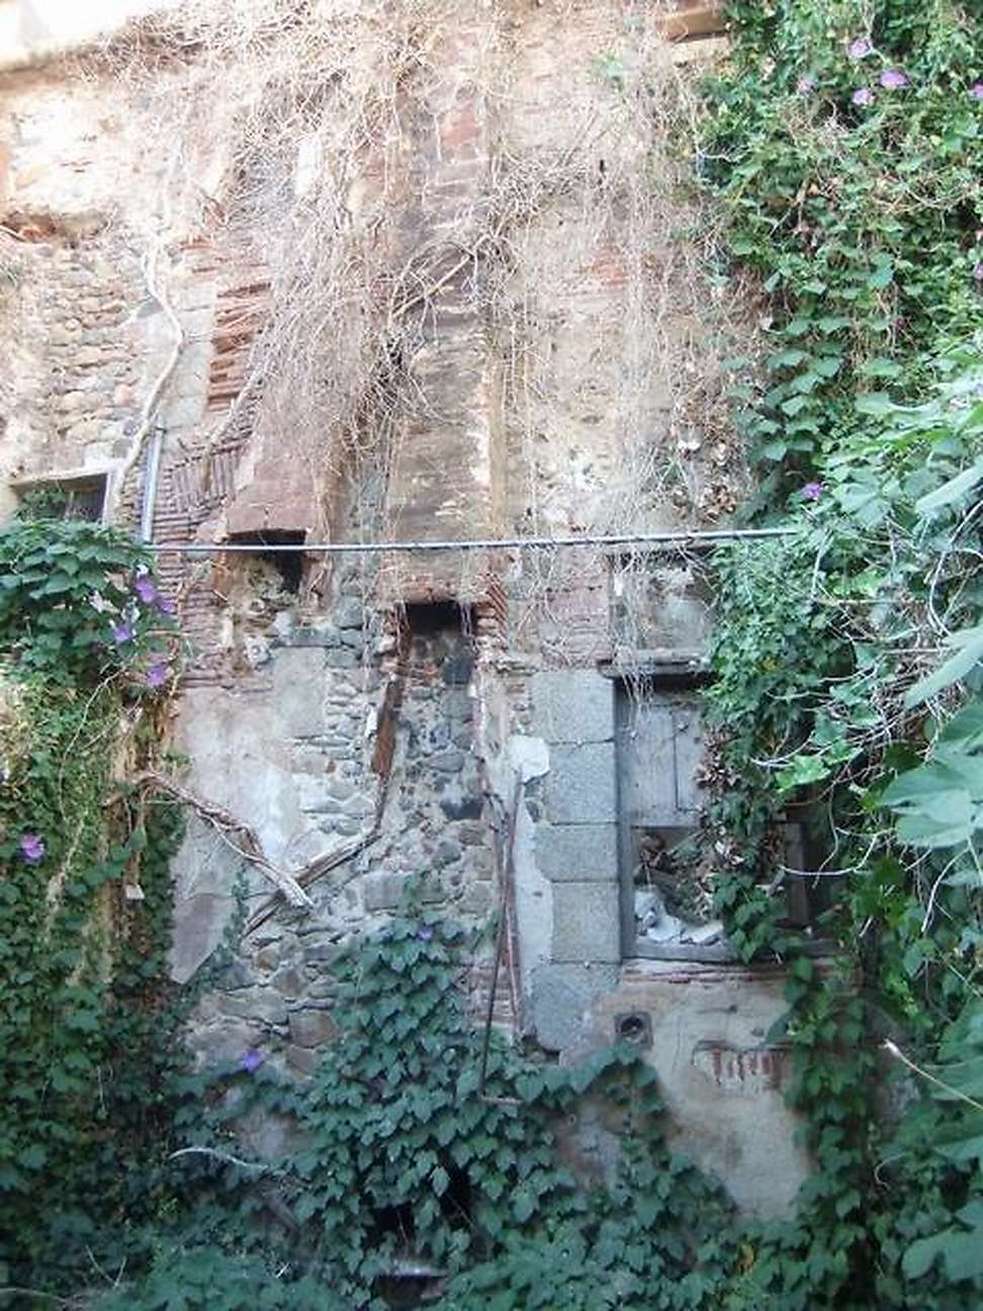 Encantadora casa de piedra, a restaurar, situada en el casco antiguo de Calonge